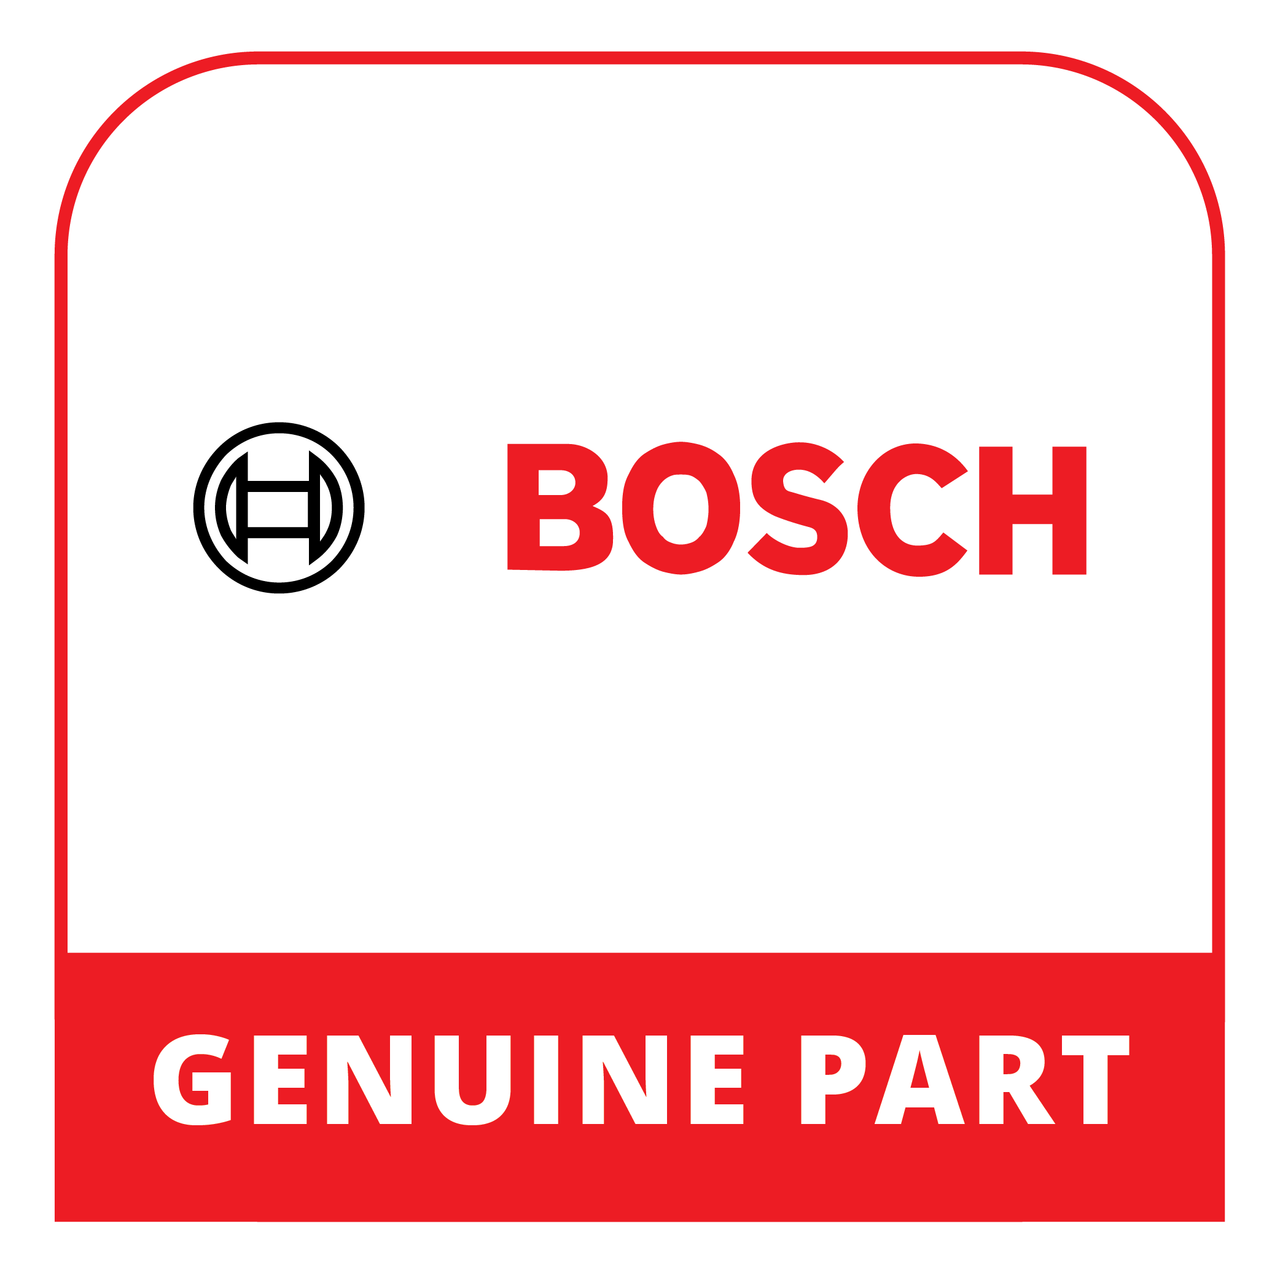 Bosch 00165271 - Actuator - Genuine Bosch (Thermador) Part